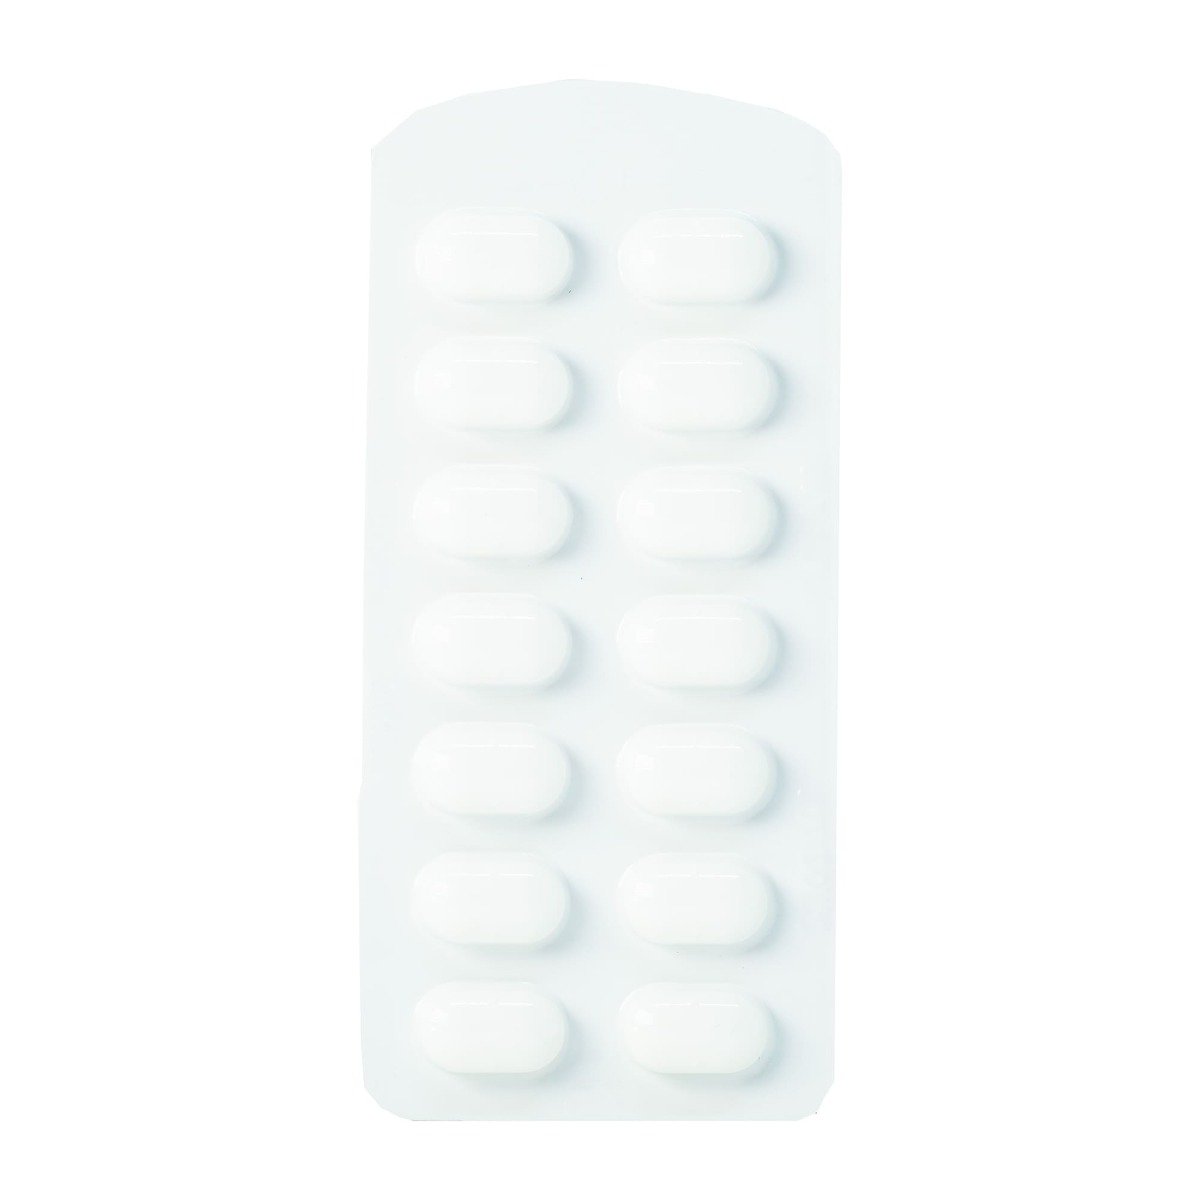 Aprovel 150 mg - 14 Tablets - Bloom Pharmacy